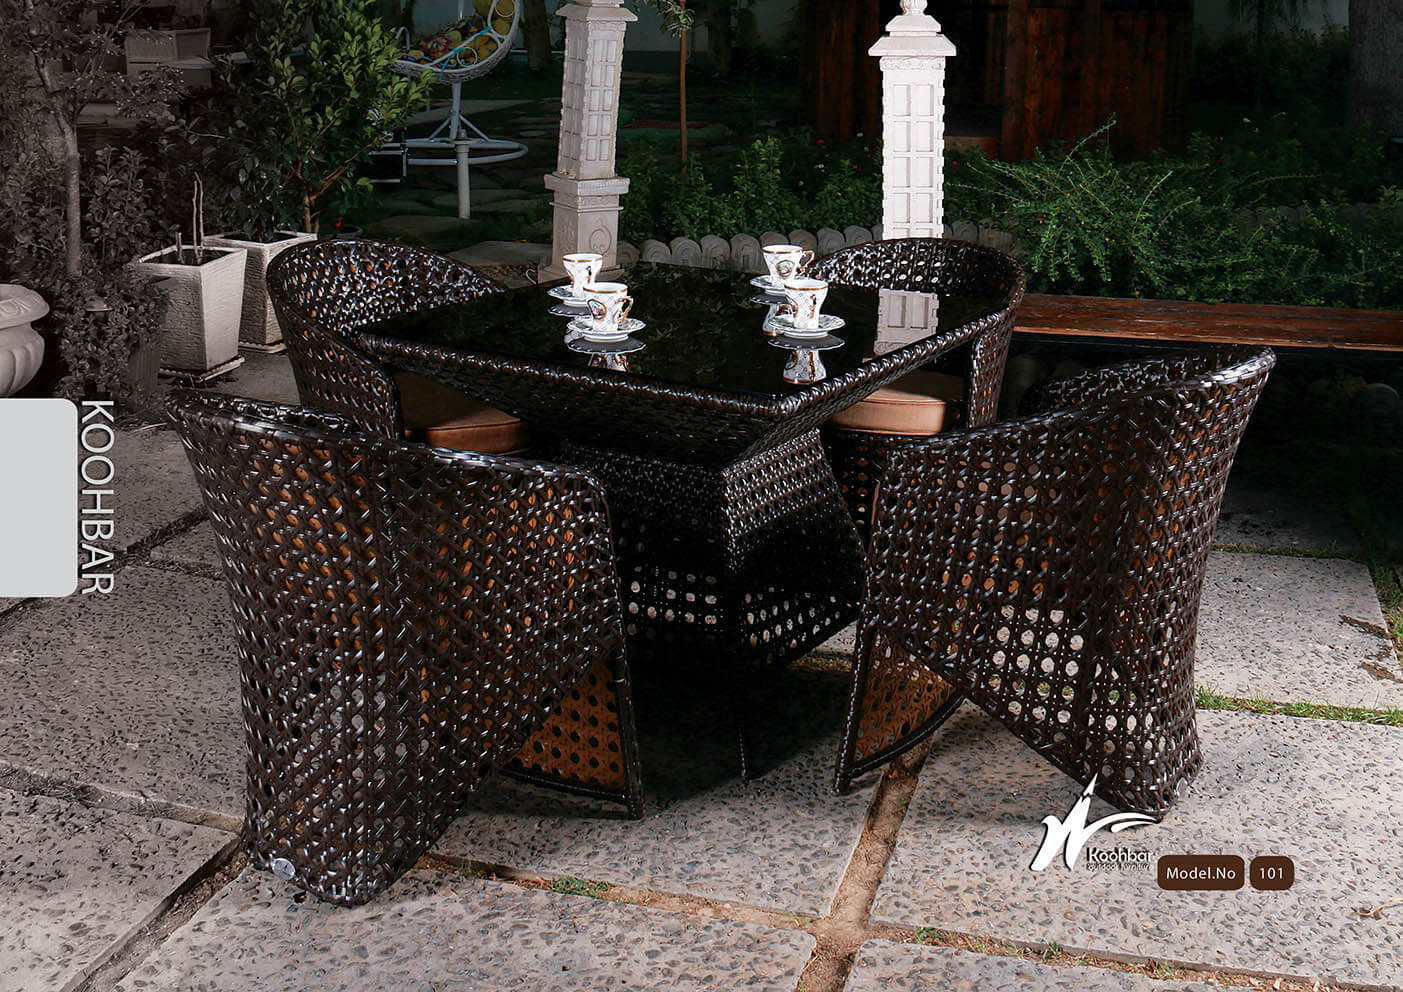 kohbar patio conversation sets 101 model0 - ست میز صندلی غذاخوری فضای باز کوهبر مدل ۱۰۱ -  - patio-dining-furniture